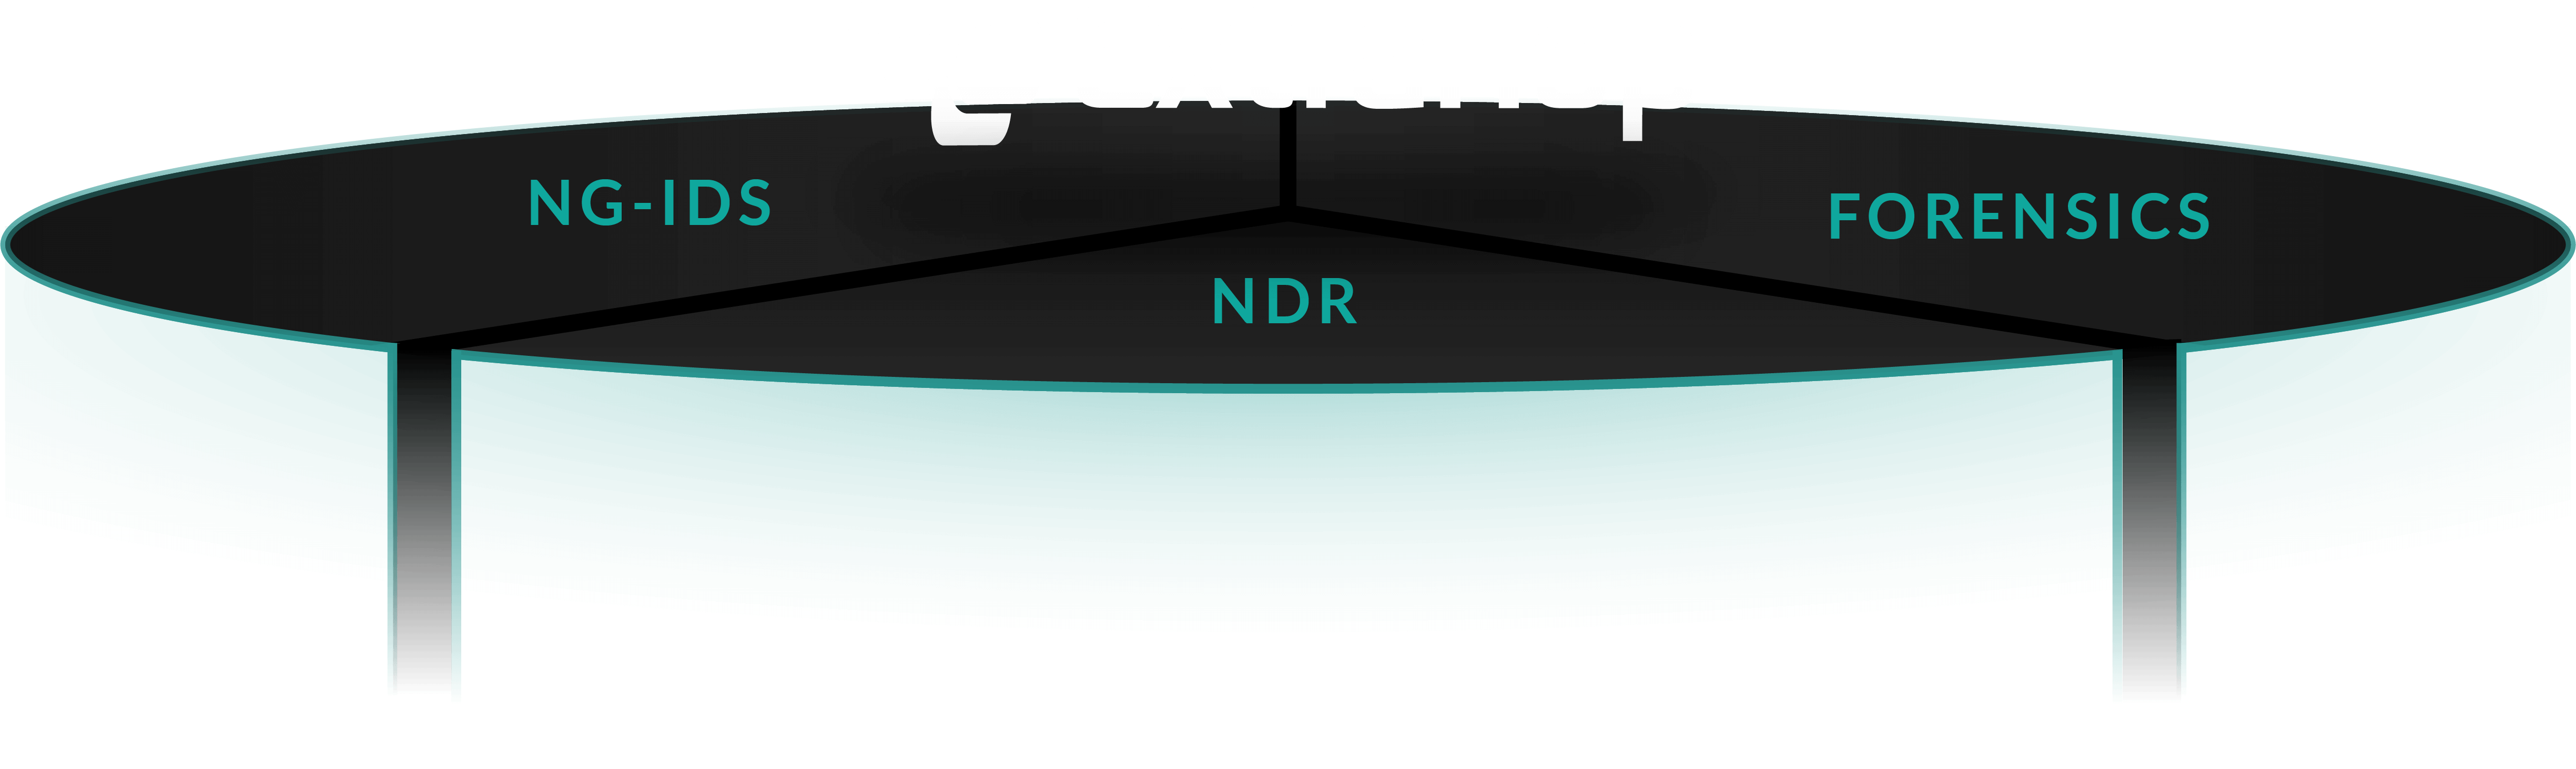 ExtraHop: NG-IDS, NDR, and Forensics